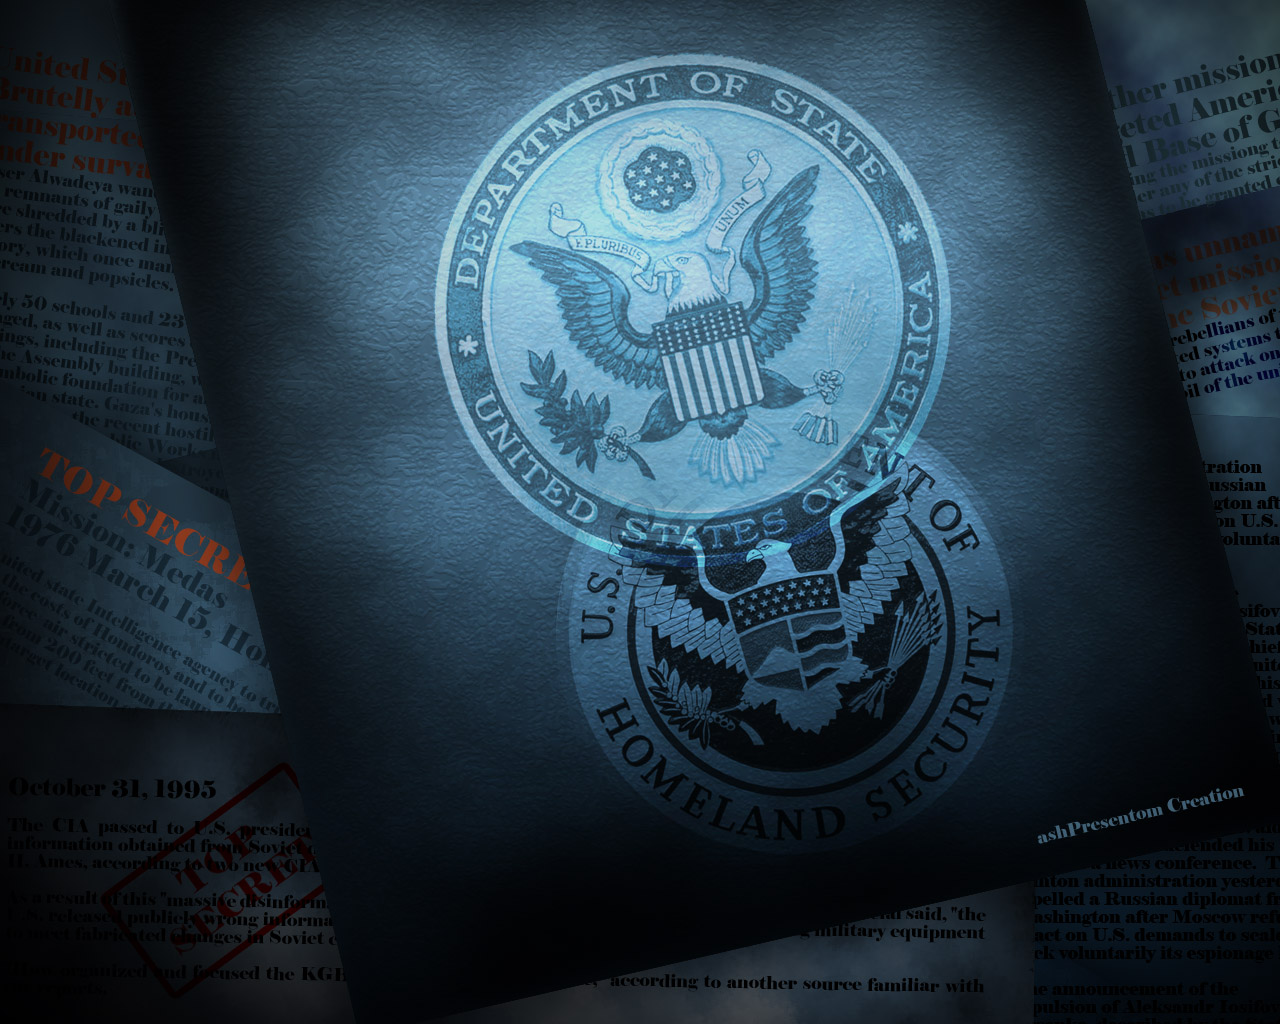 Top Secret US Intelligence by ashPresentom   Desktop Wallpaper